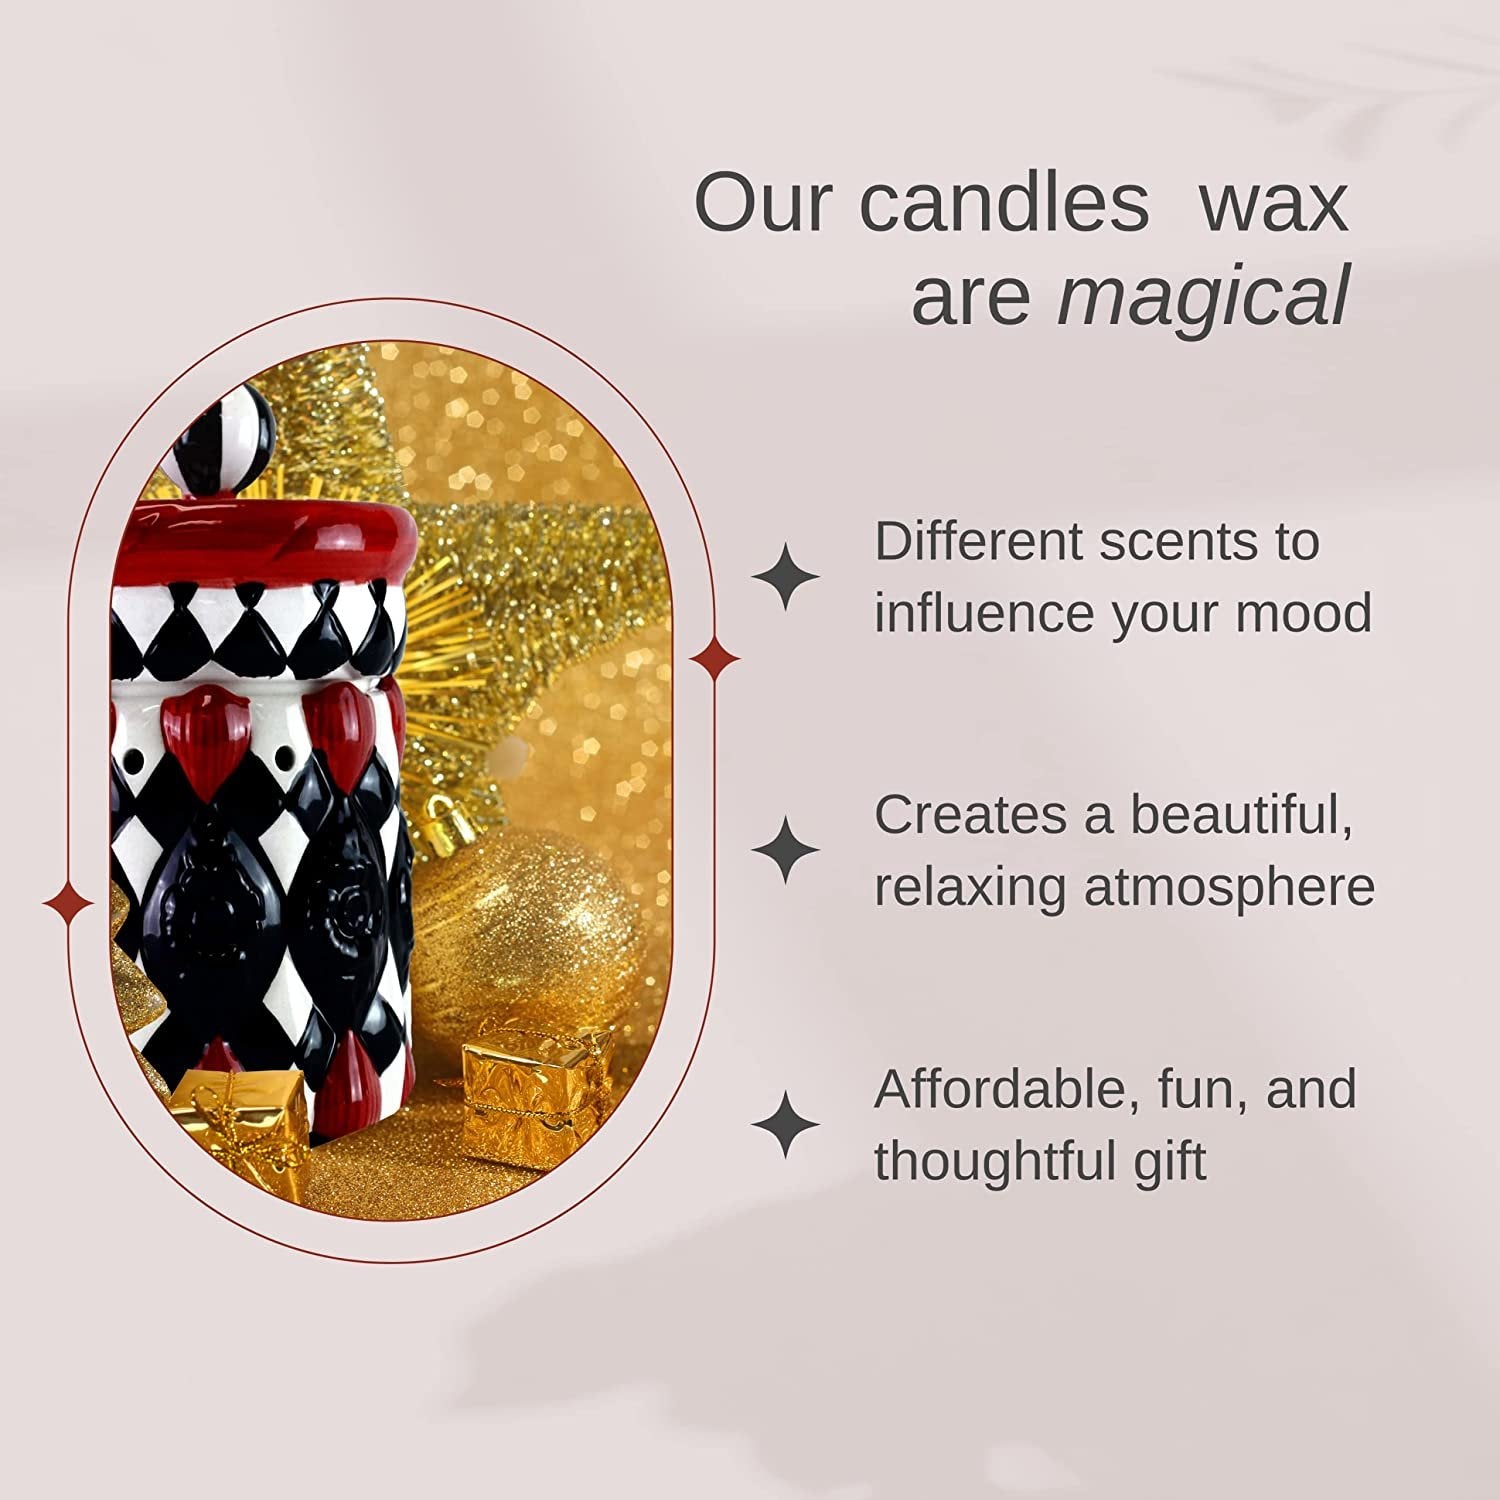 Yankee Candle Magical Christmas Morning Wax Melt Warmer Gift Set